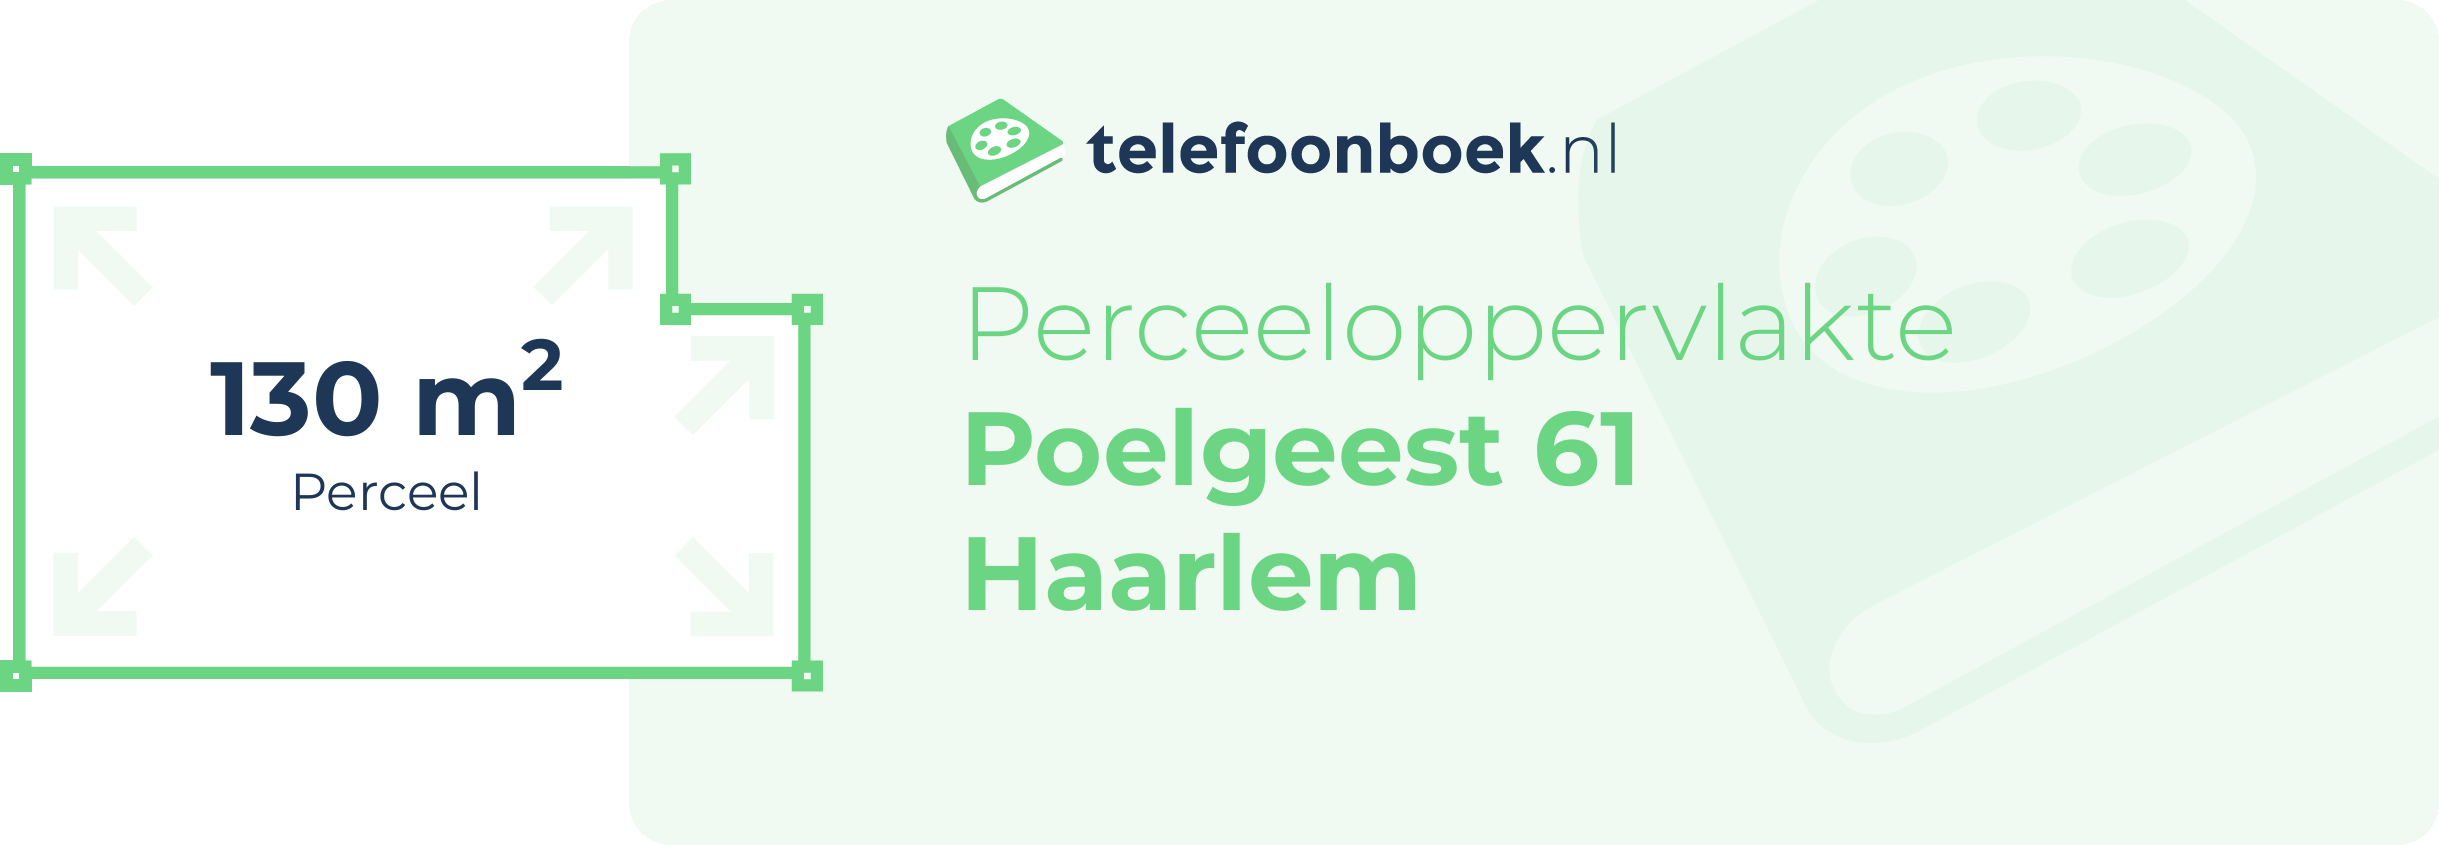 Perceeloppervlakte Poelgeest 61 Haarlem